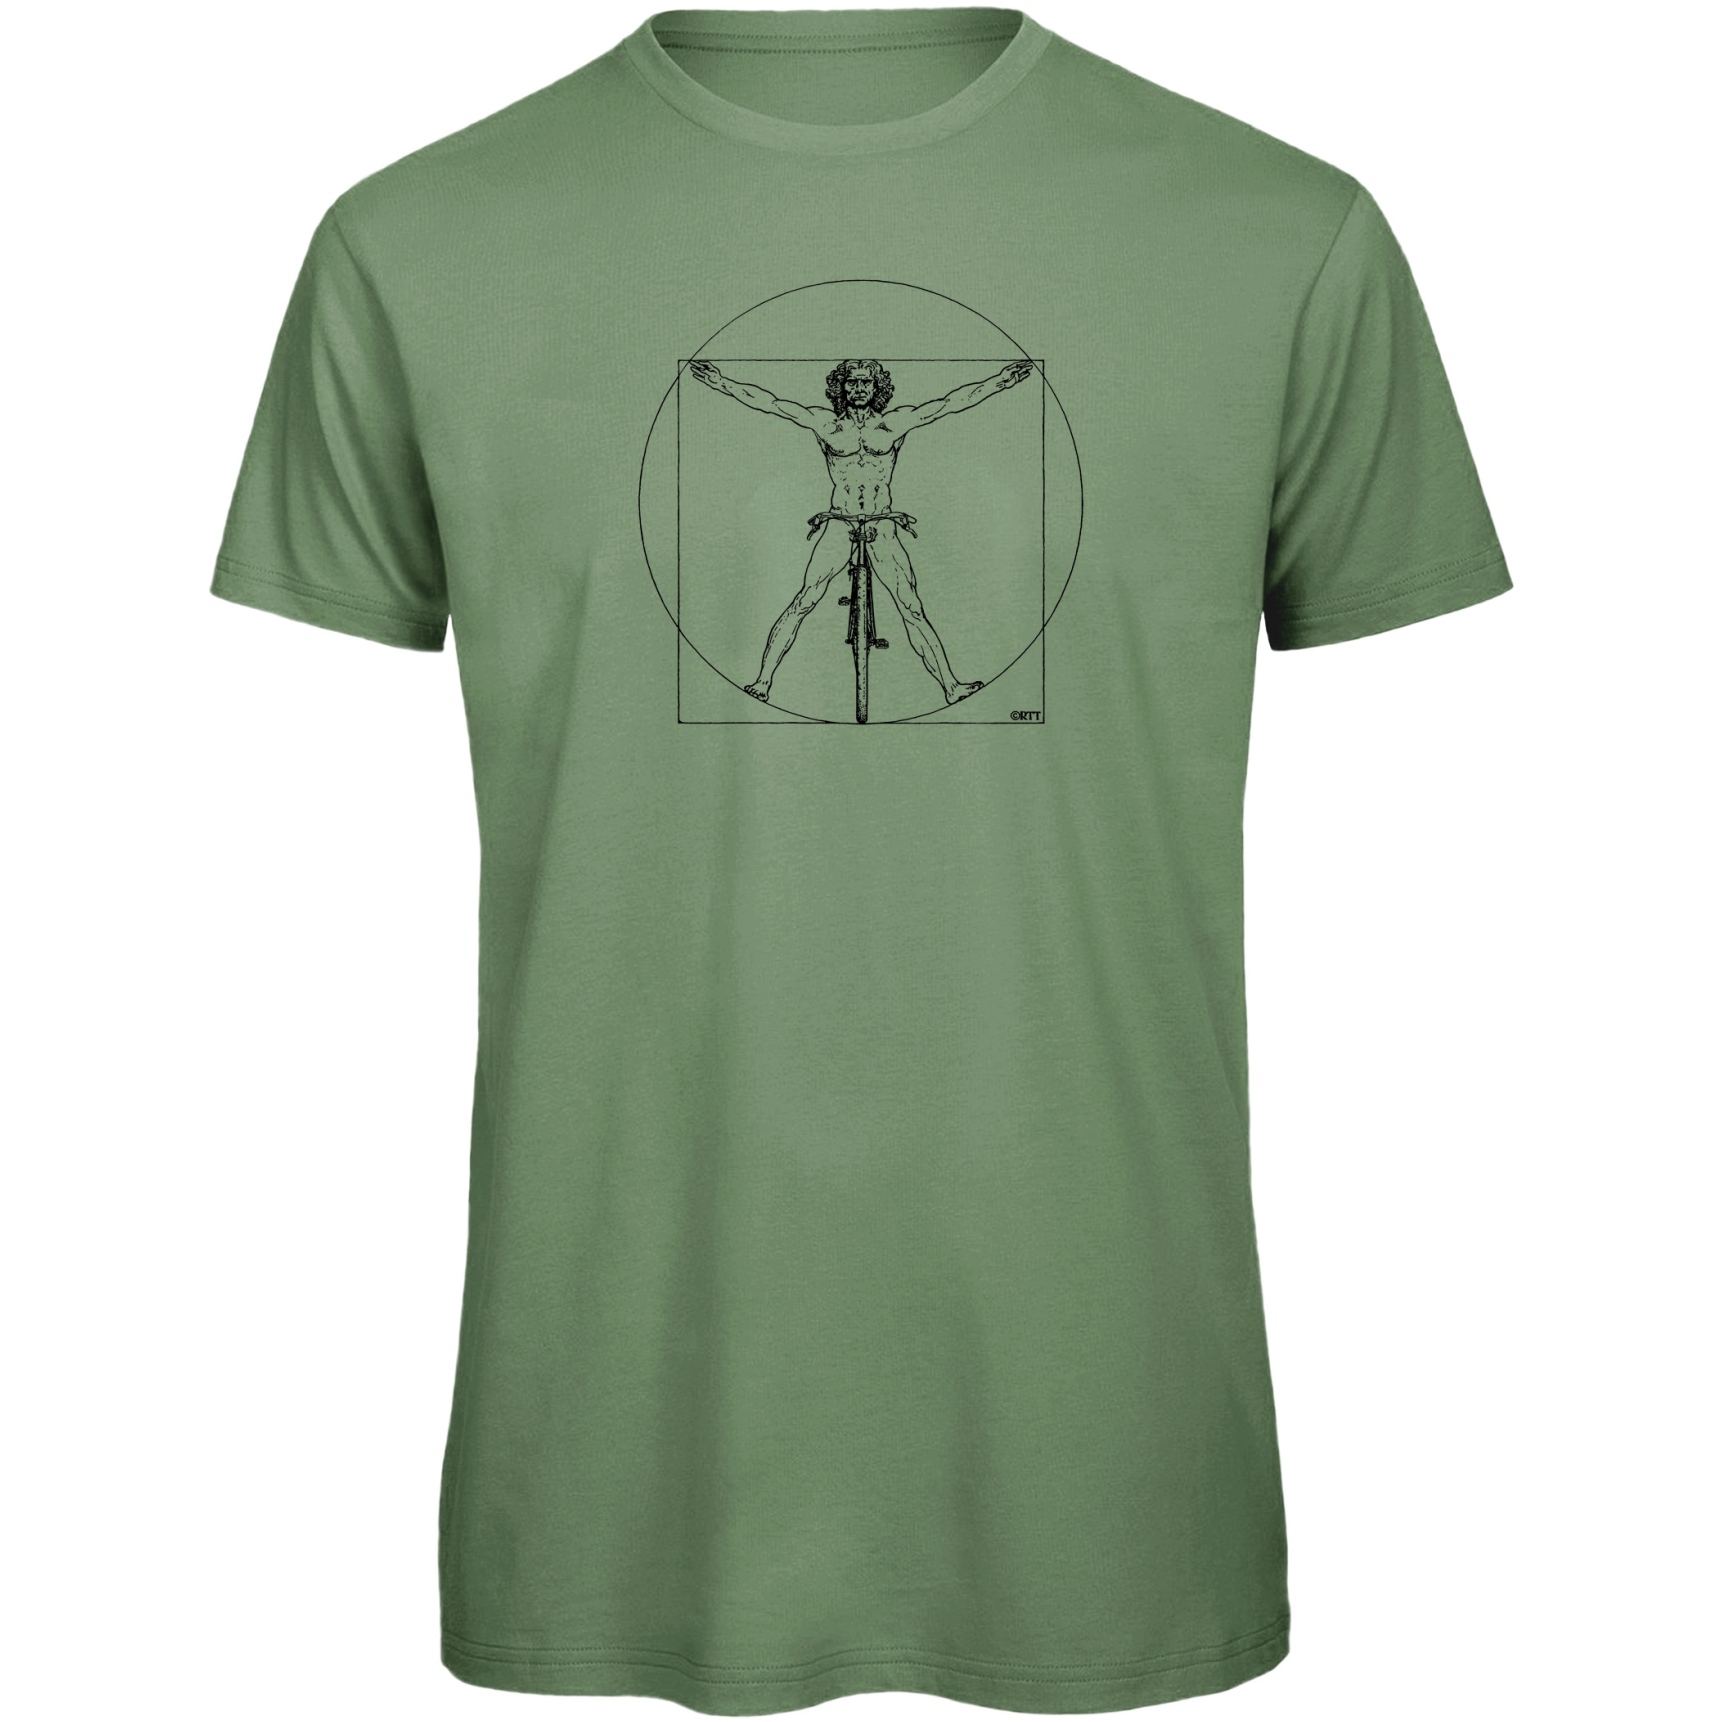 Foto de RTTshirts Camiseta Bicicleta - DaVinci - verde claro